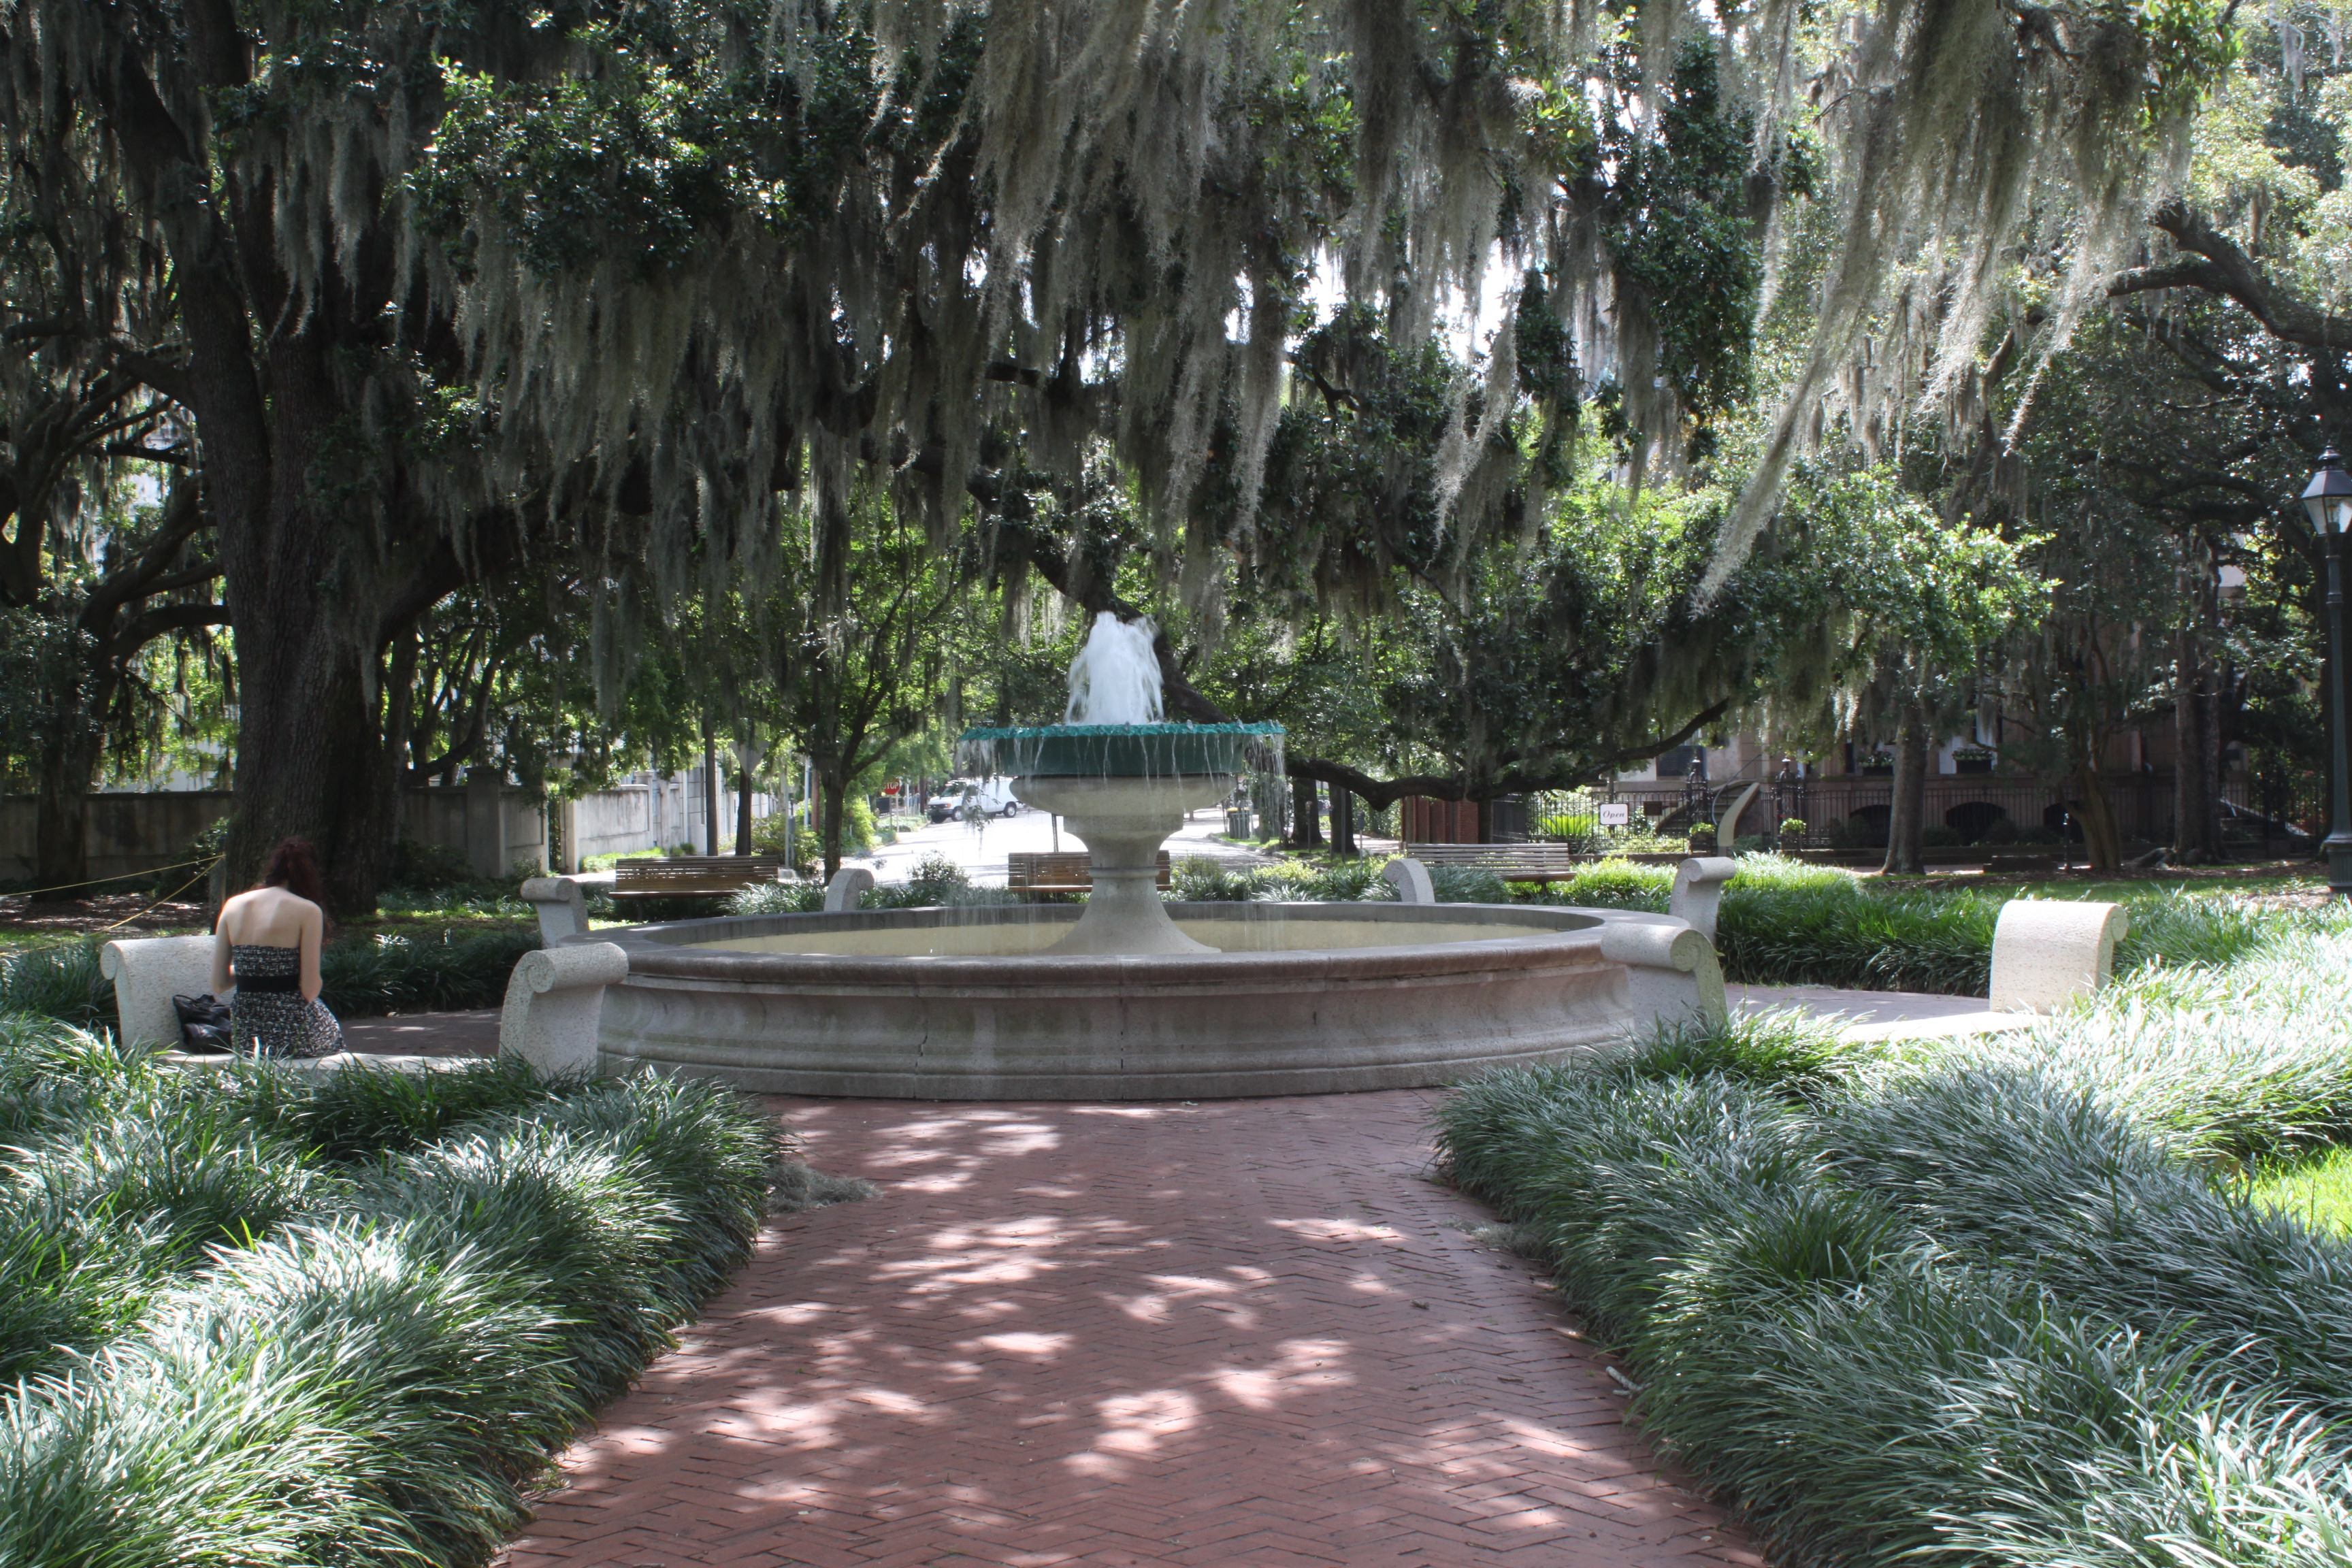 Orleans Square, the backyard to Savannah’s Civic Center and Savann